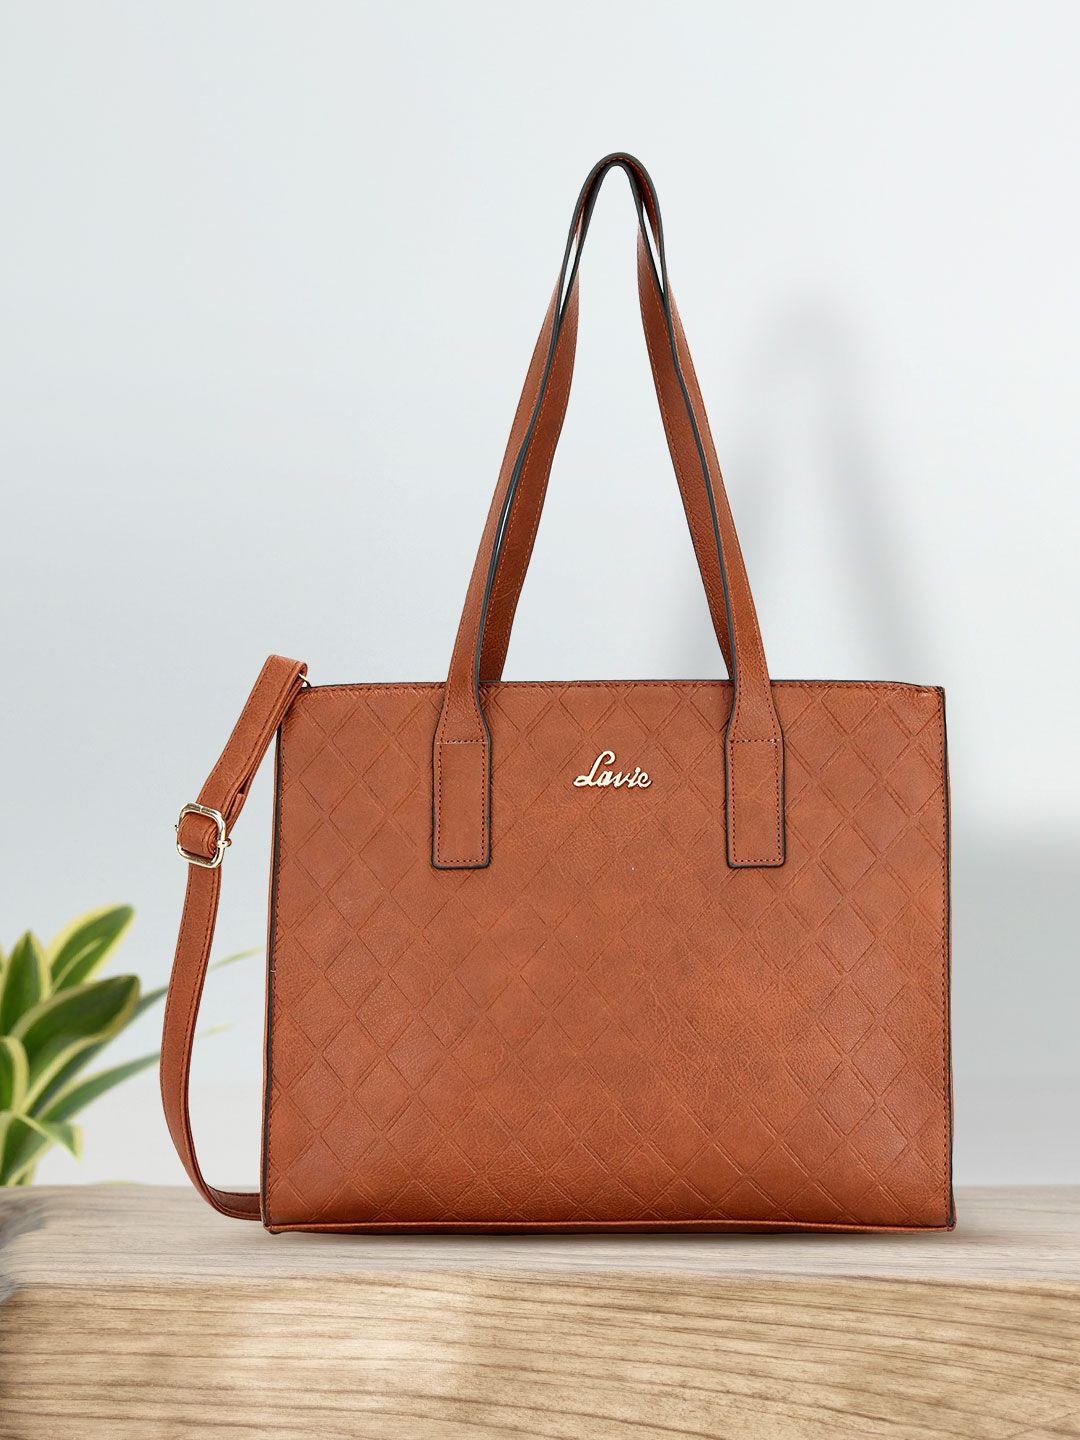 Lavie Brown Solid Shoulder Bag Price in India